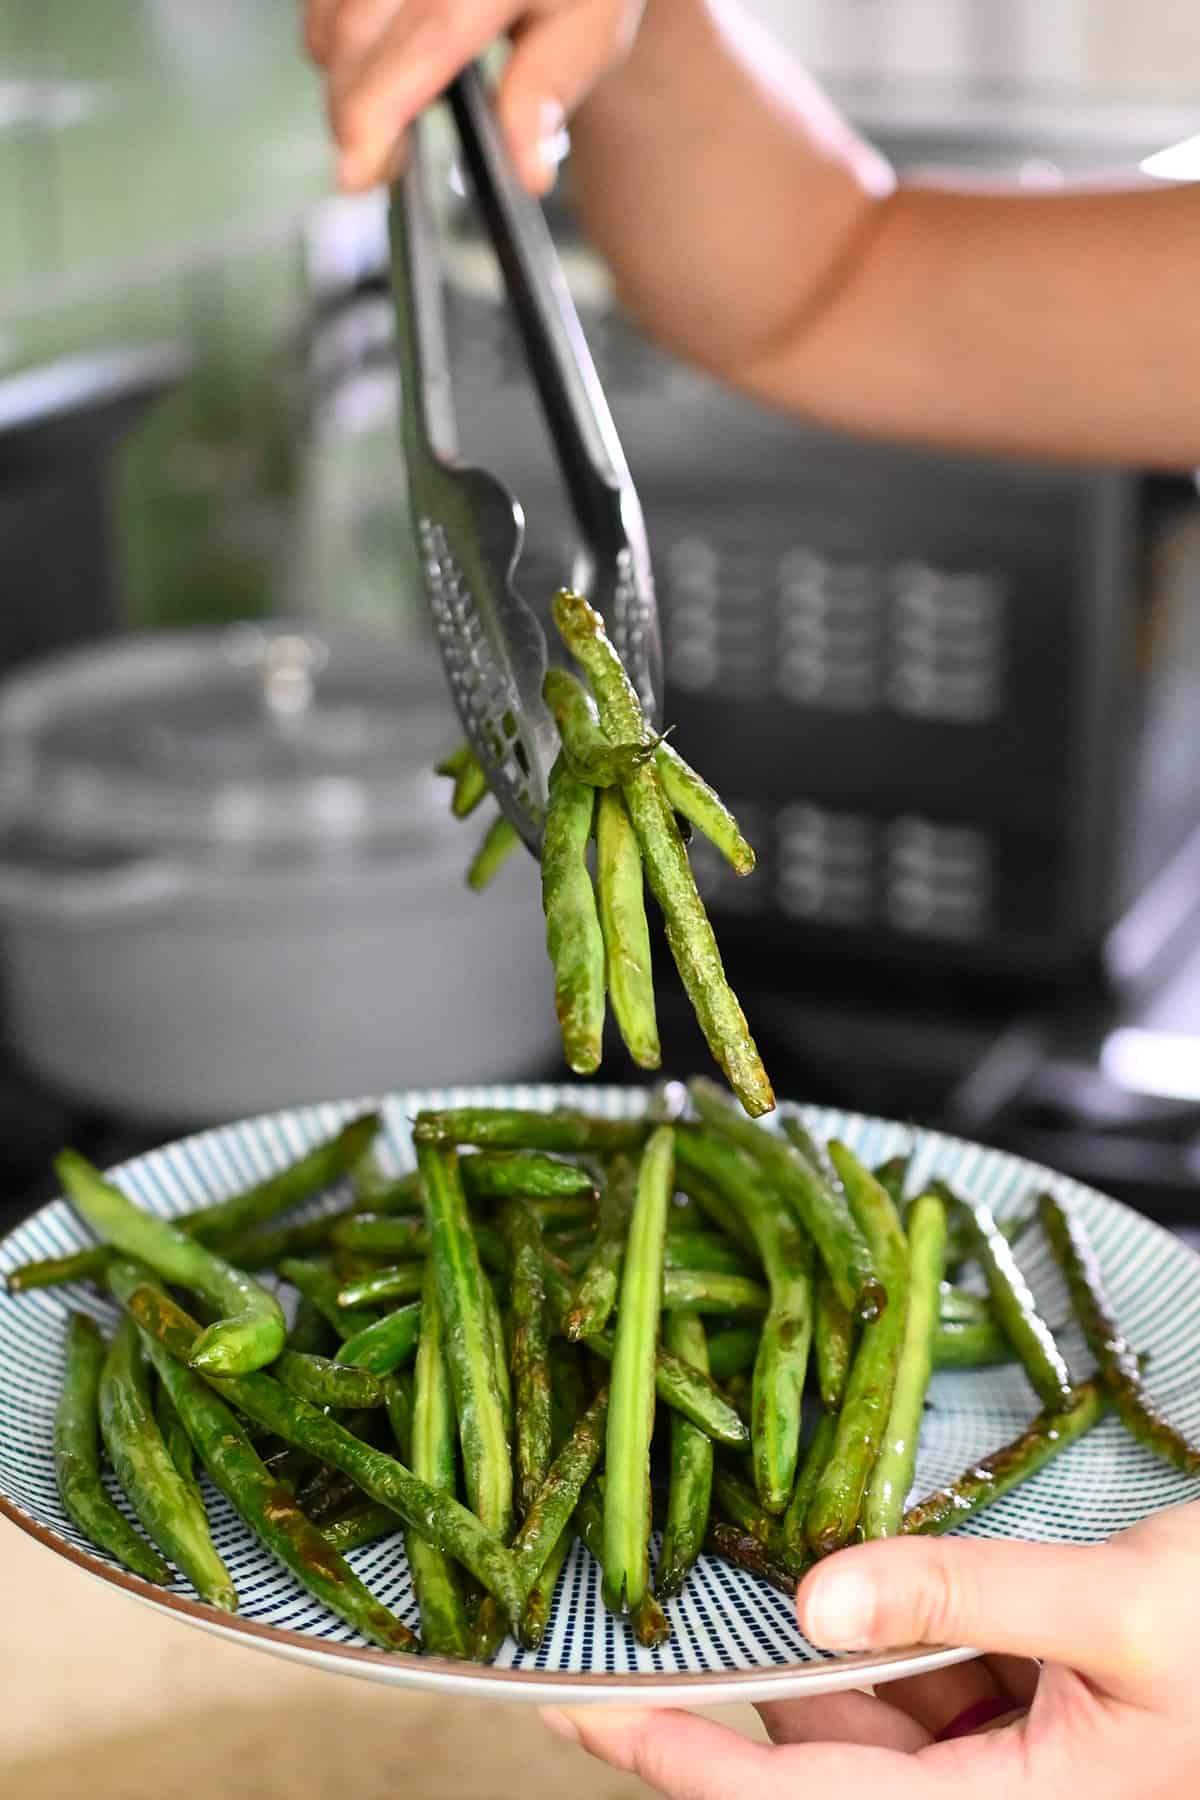 Transferring blistered green beans onto a blue and white platter.